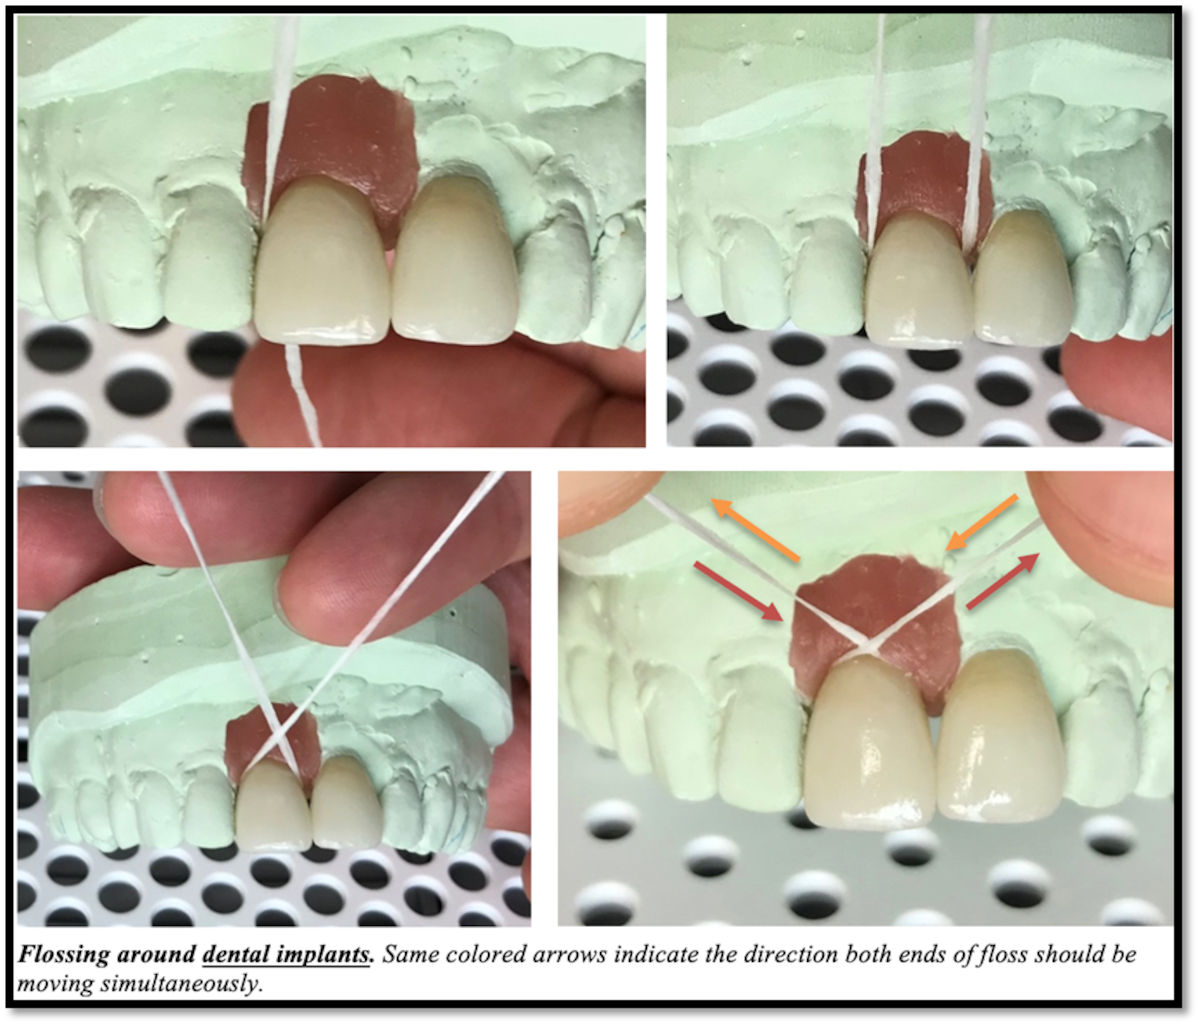 Flossing around dental implants